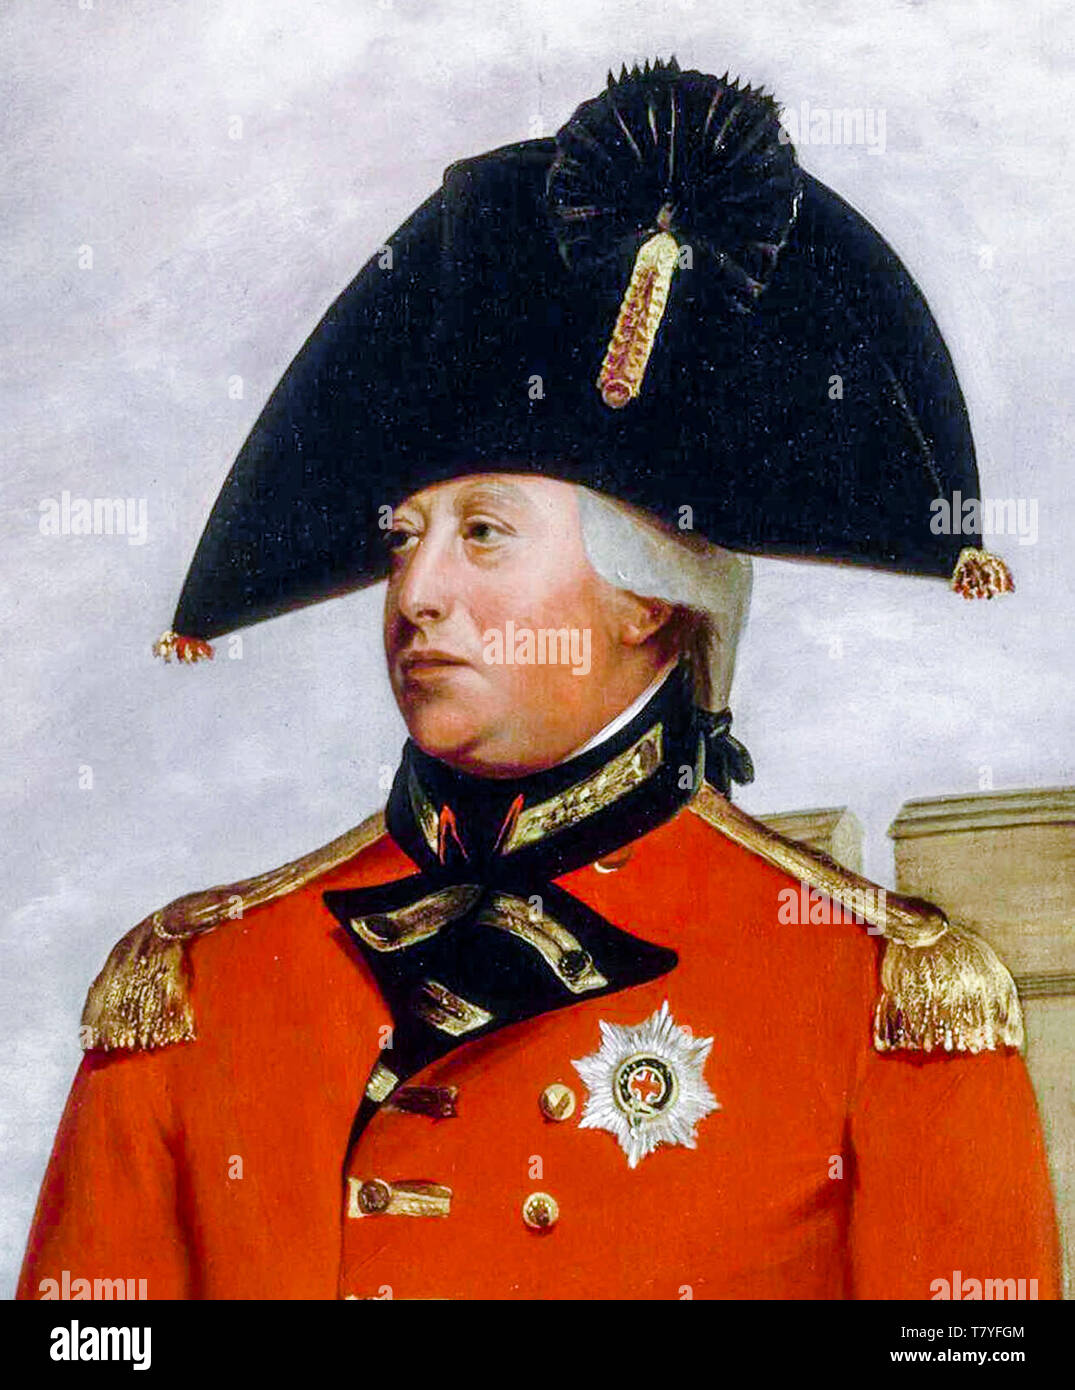 William Beechey, George III (1738-1820) in military uniform, portrait painting c. 1800 Stock Photo